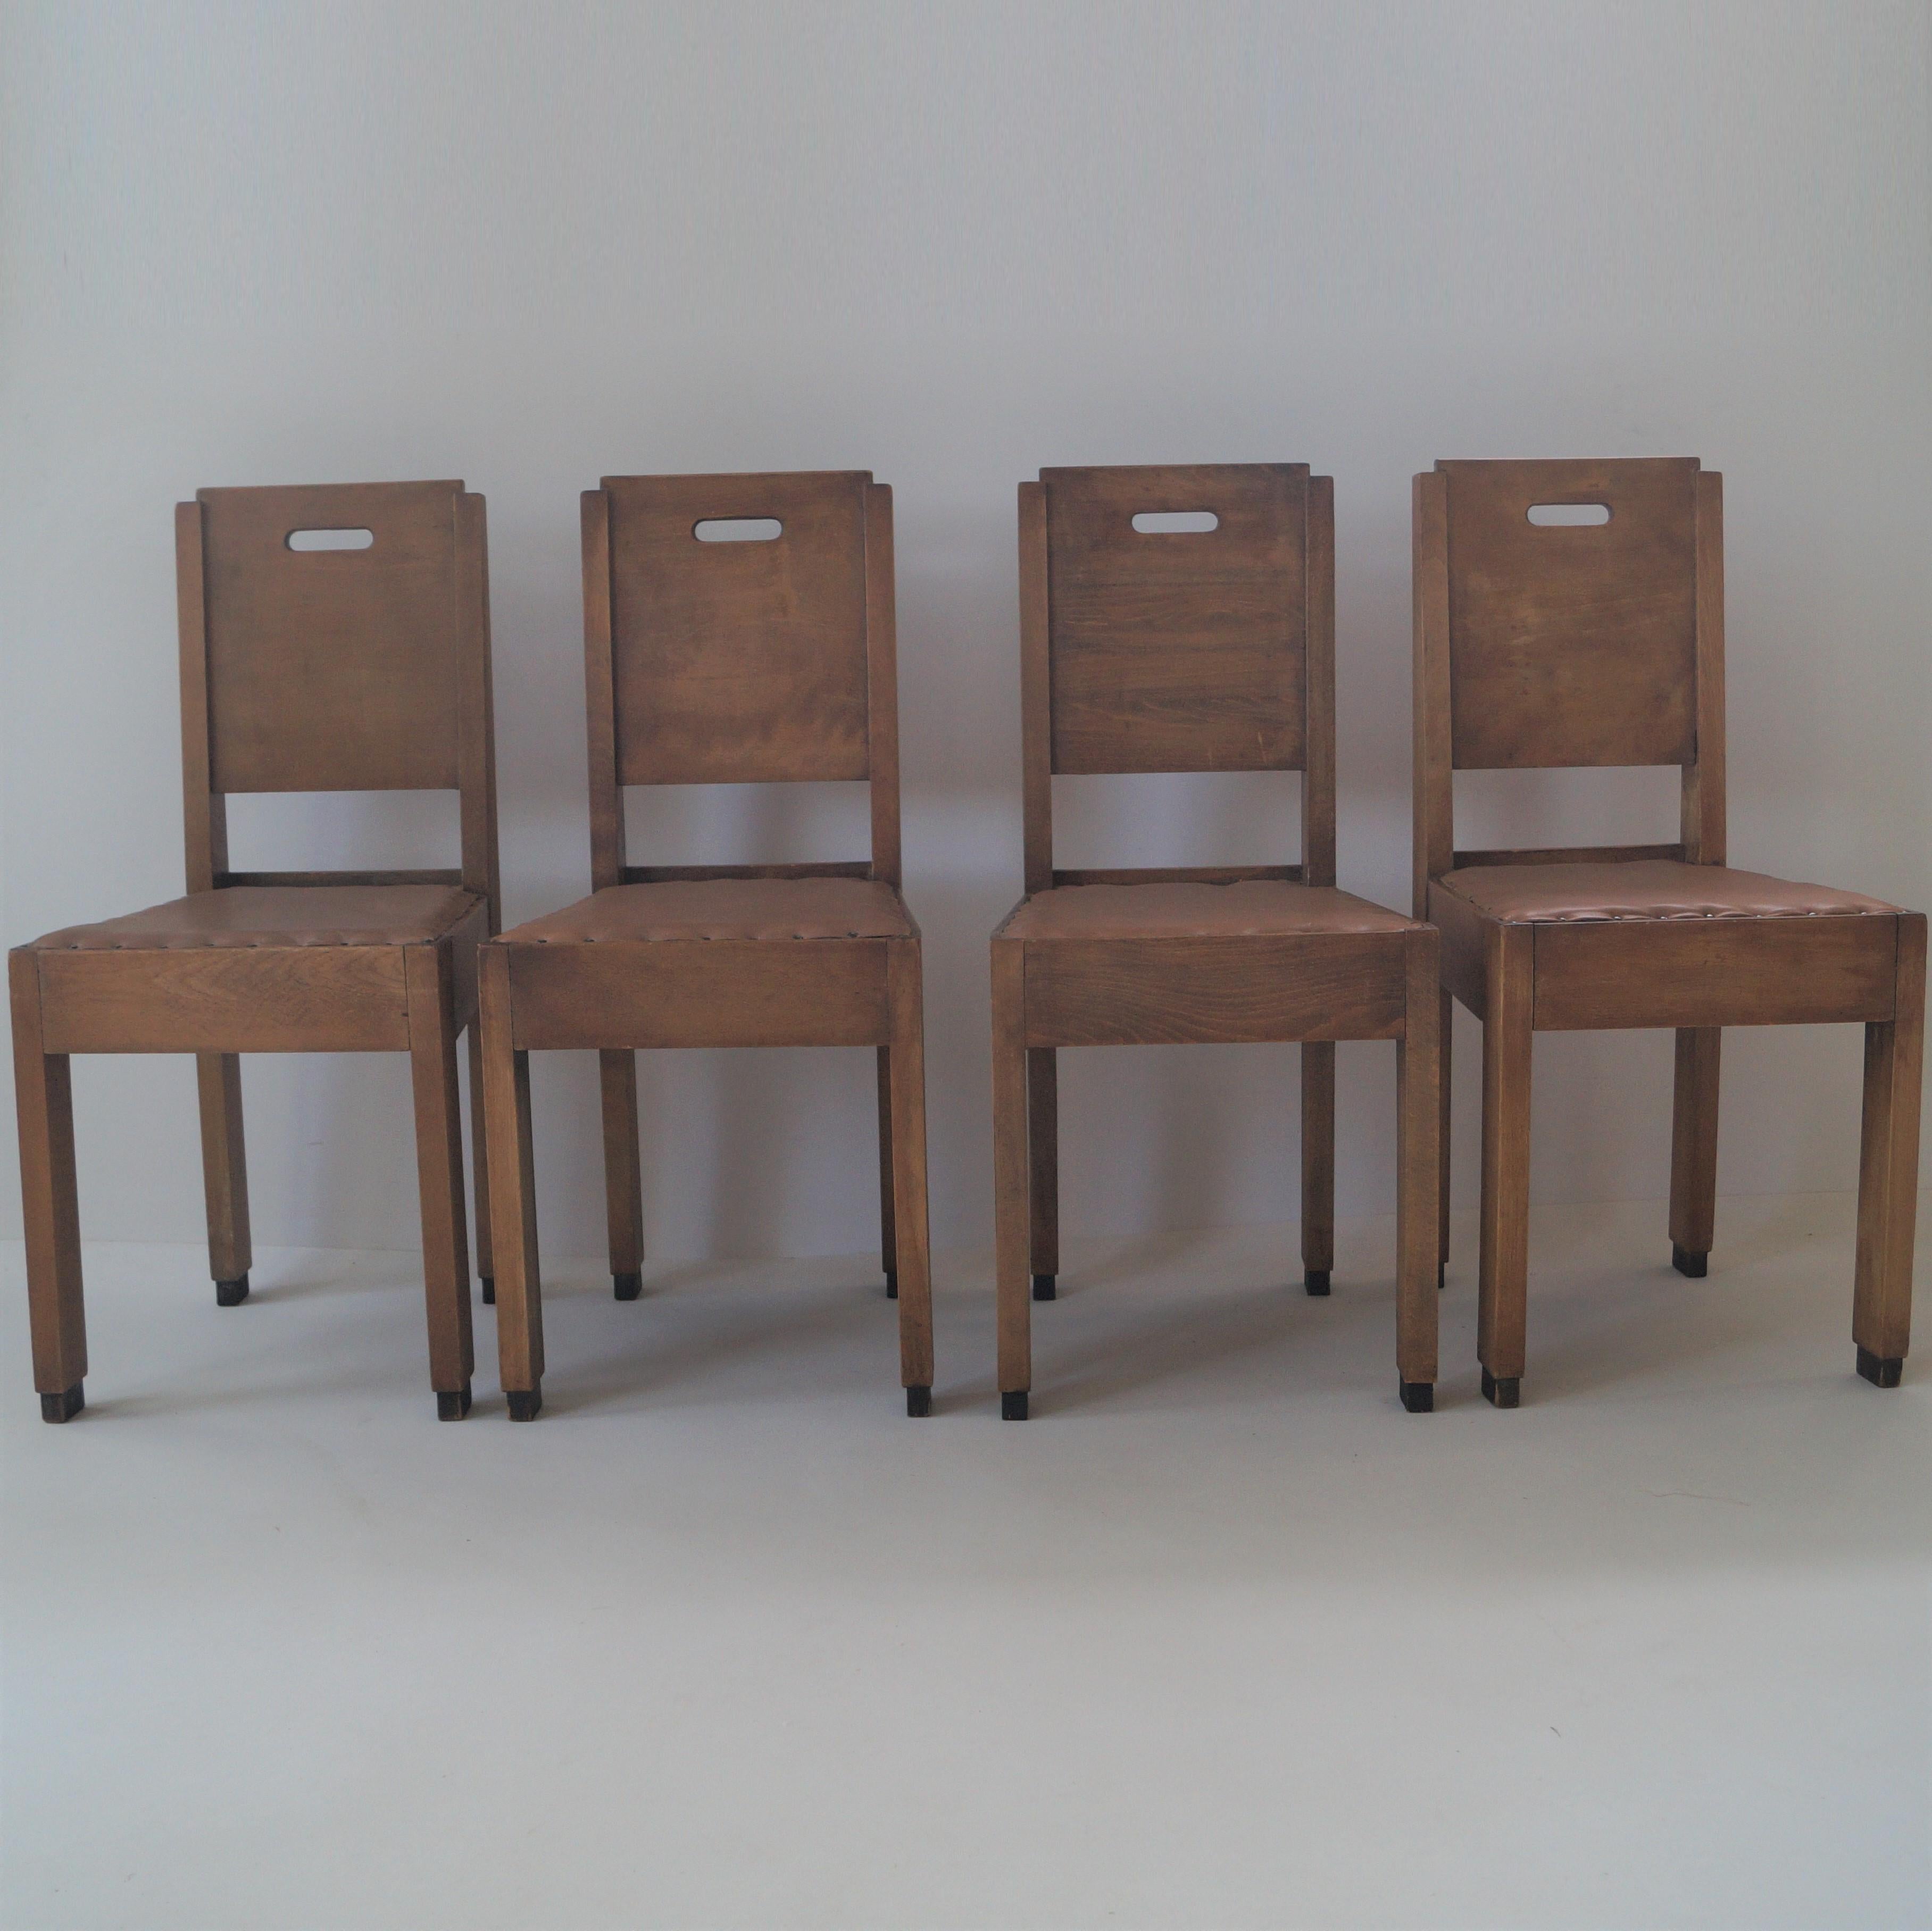 Dutch Art Deco De Stijl/Haagse School set of chairs, 1920s For Sale 13